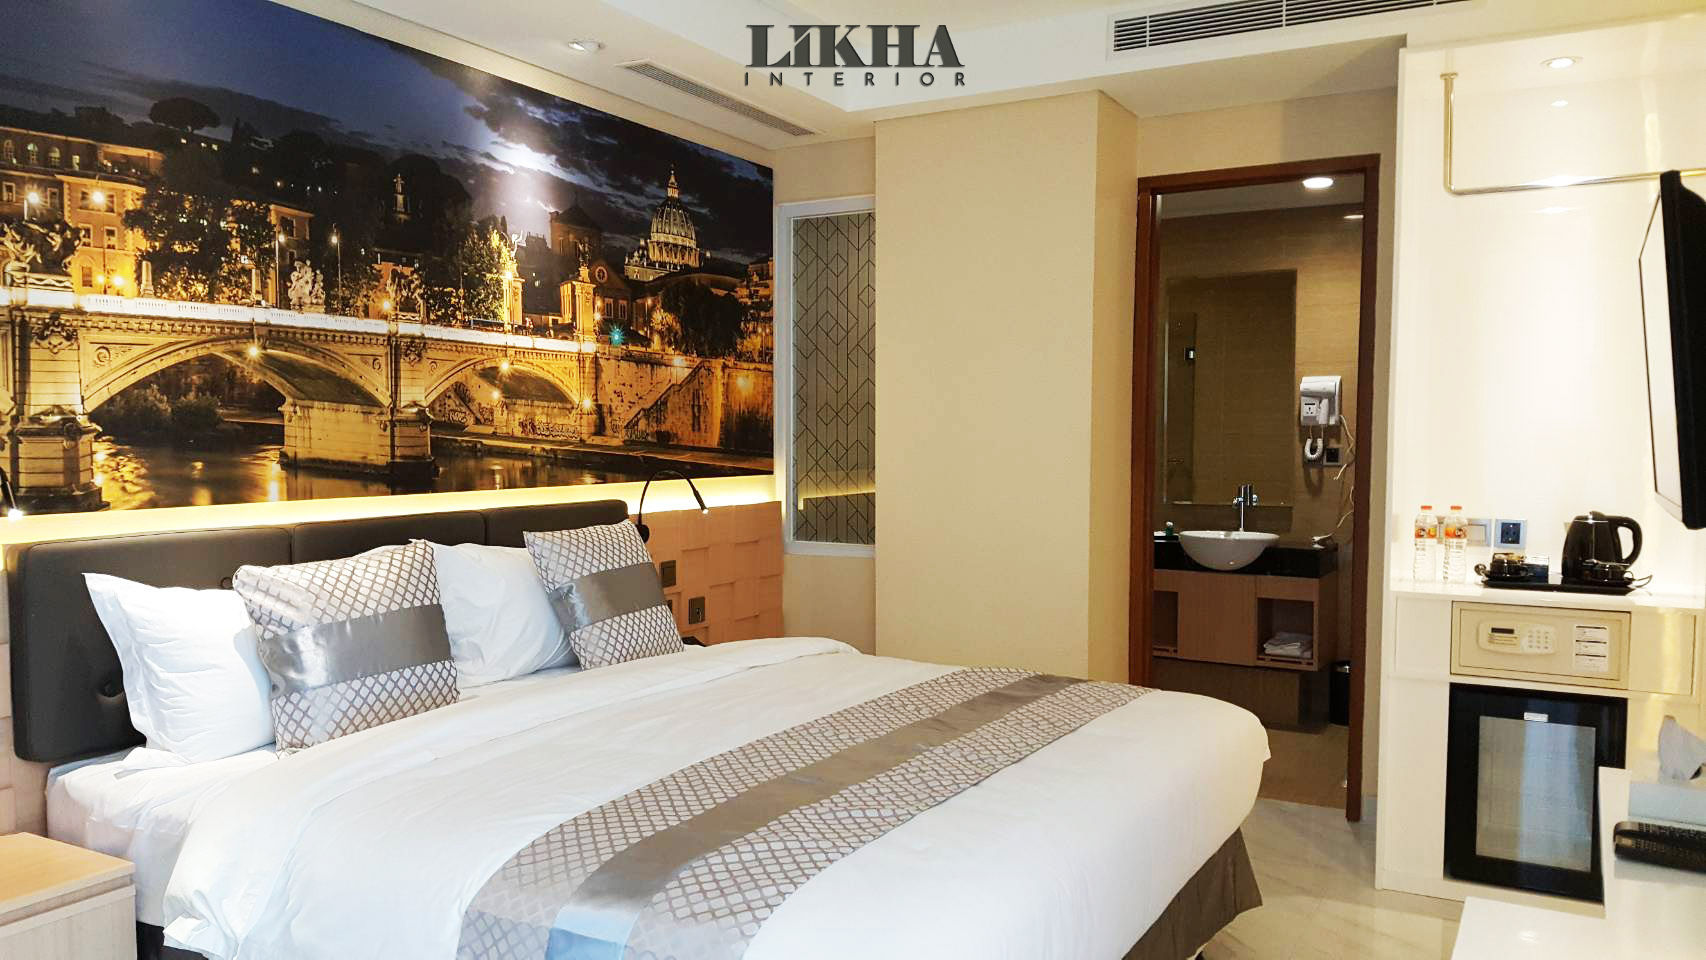 HOTEL ELEGAN DAN NYAMAN di Grand Viveana, Likha Interior Likha Interior พื้นที่เชิงพาณิชย์ แผ่นไม้อัด Plywood โรงแรม